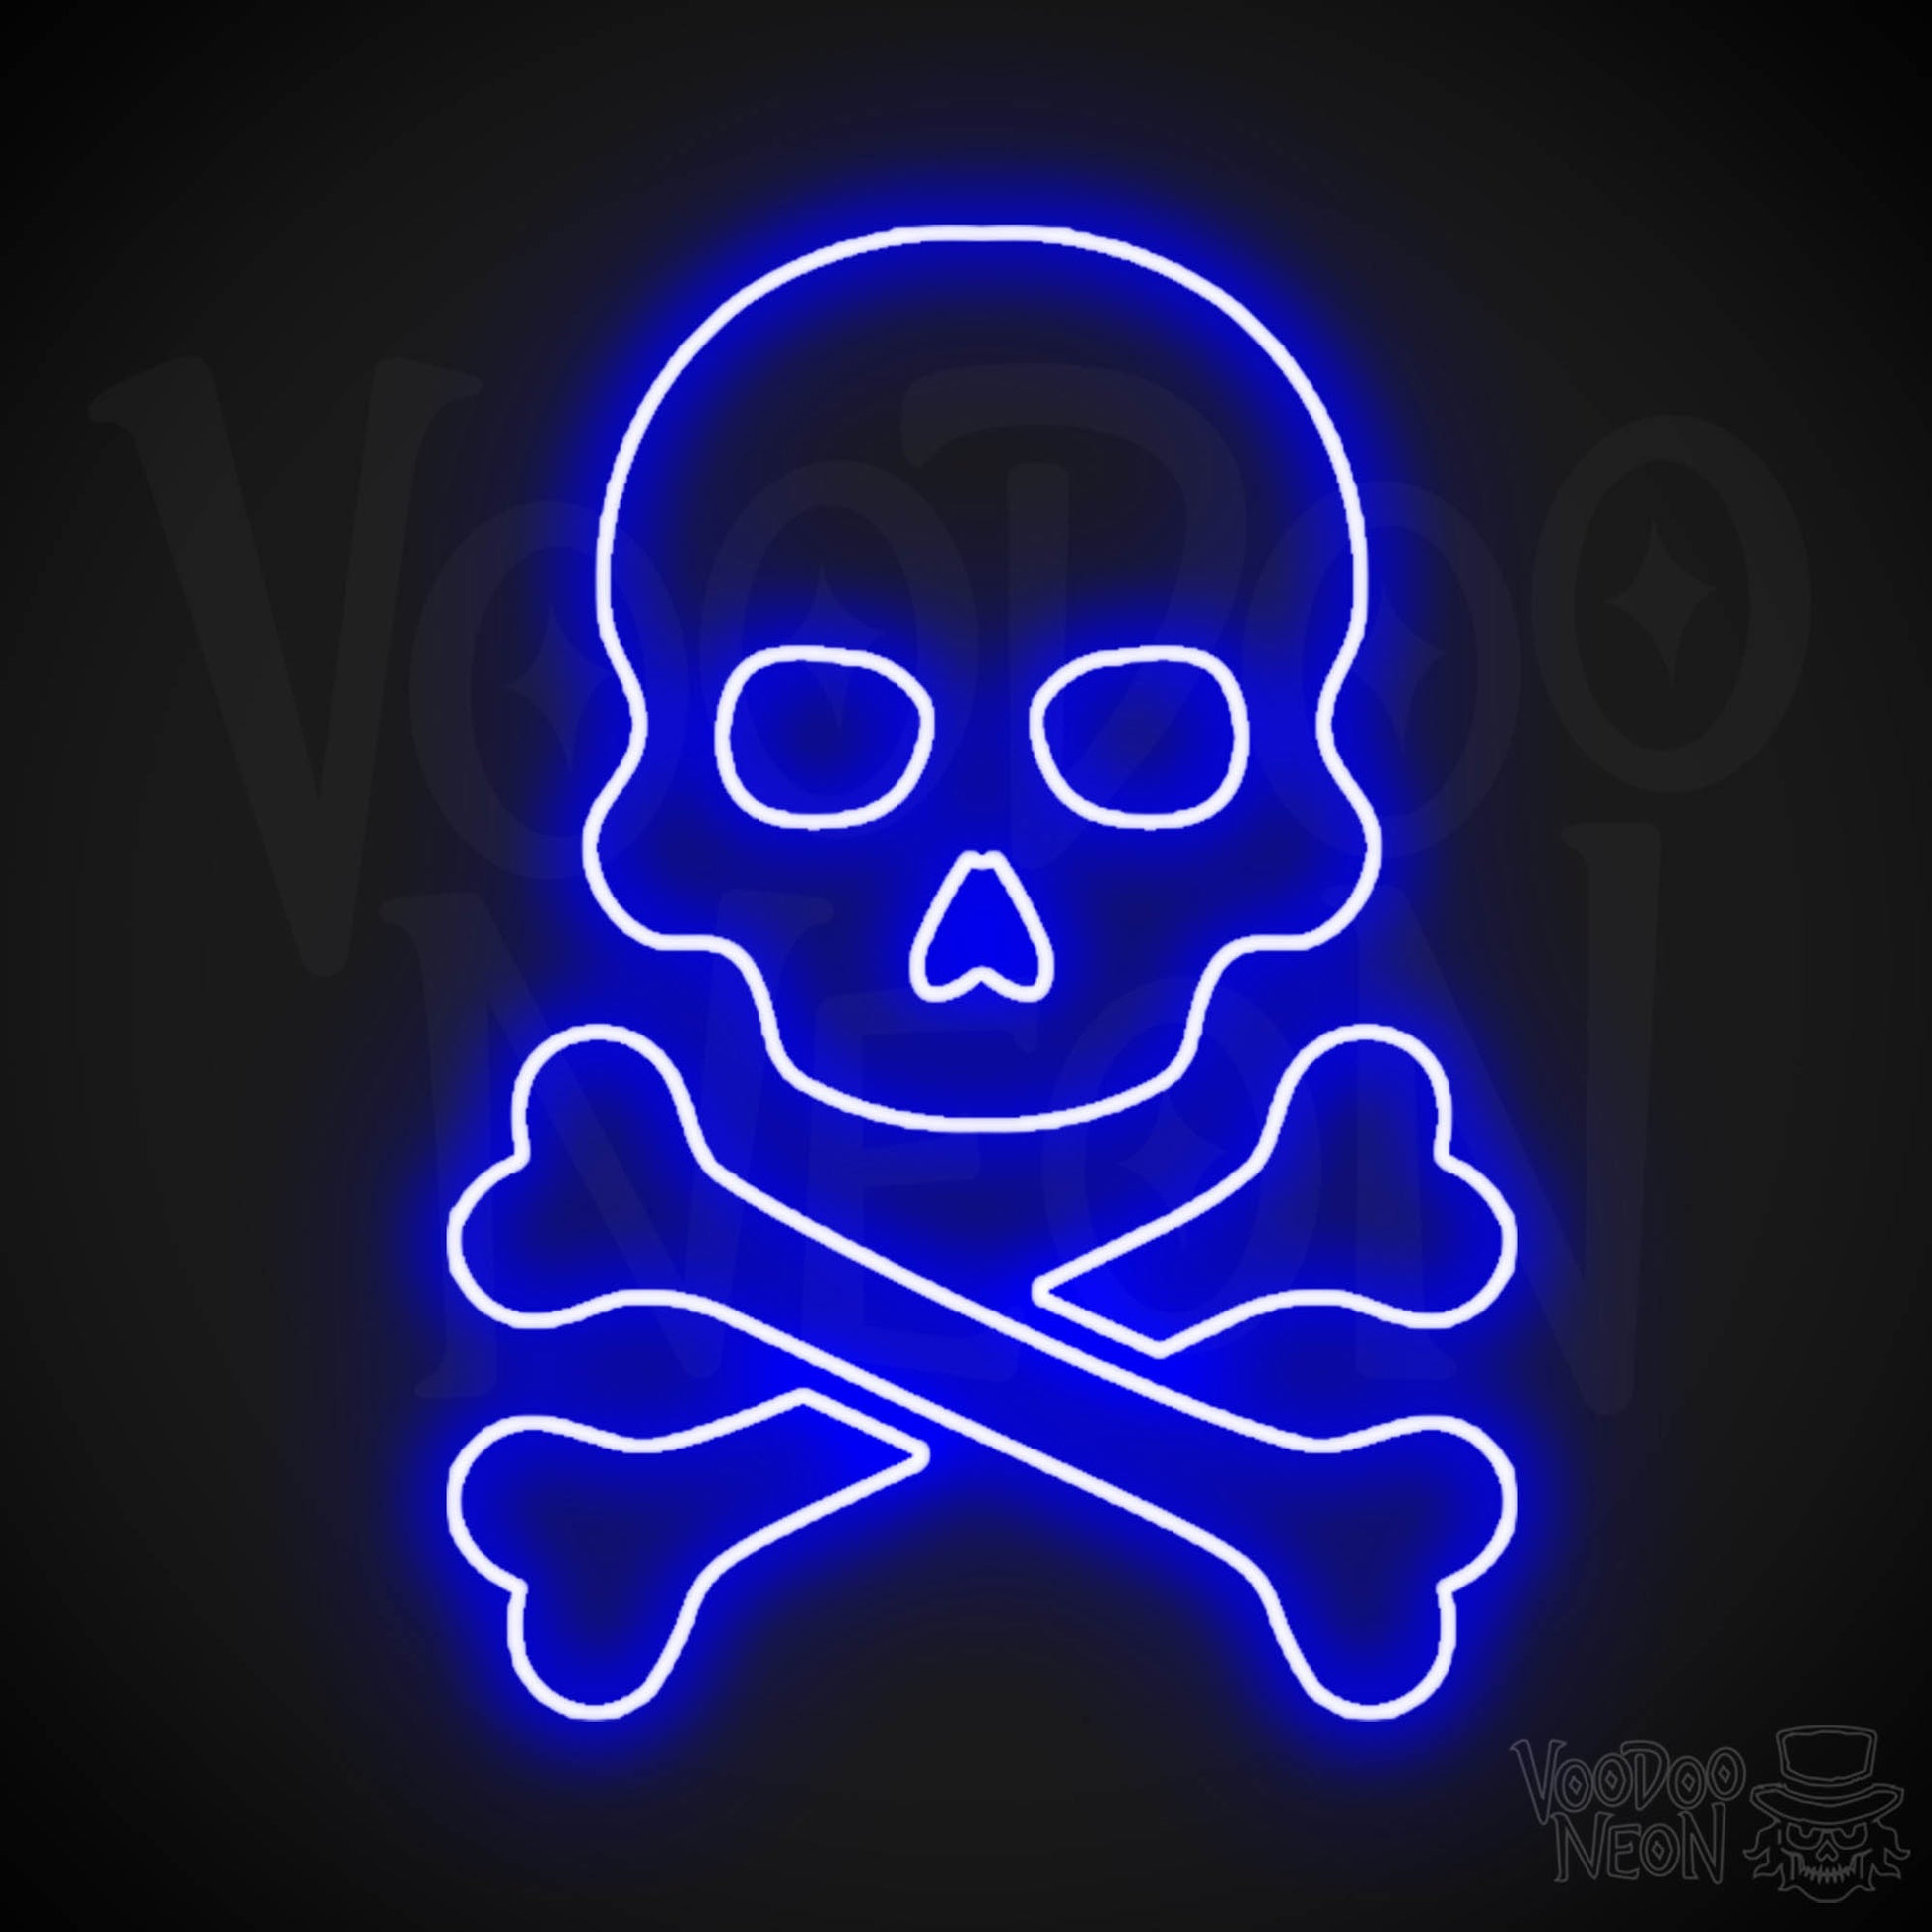 Pirate Skull & Crossbones Neon Sign - Neon Pirate Skull & Crossbones Sign - LED Lights - Color Dark Blue